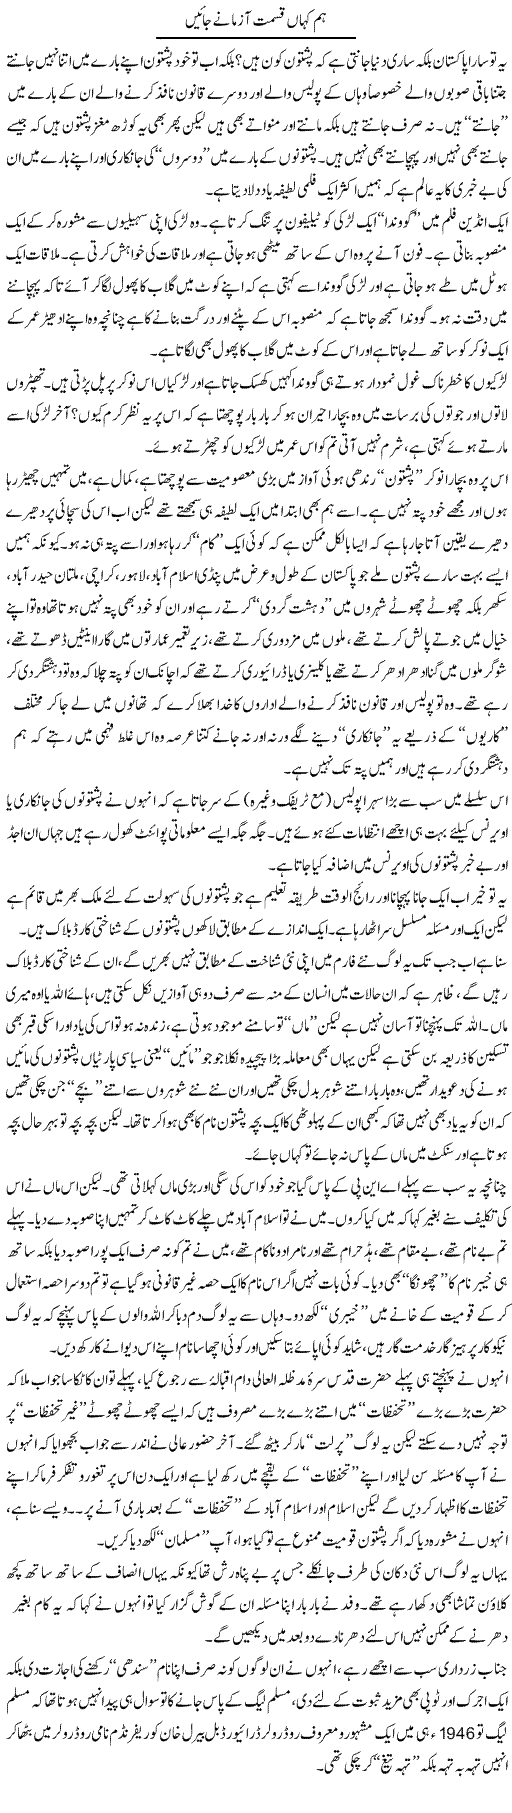 Hum Kahan Kismat Aazmane Jayen | Saad Ullah Jan Barq | Daily Urdu Columns